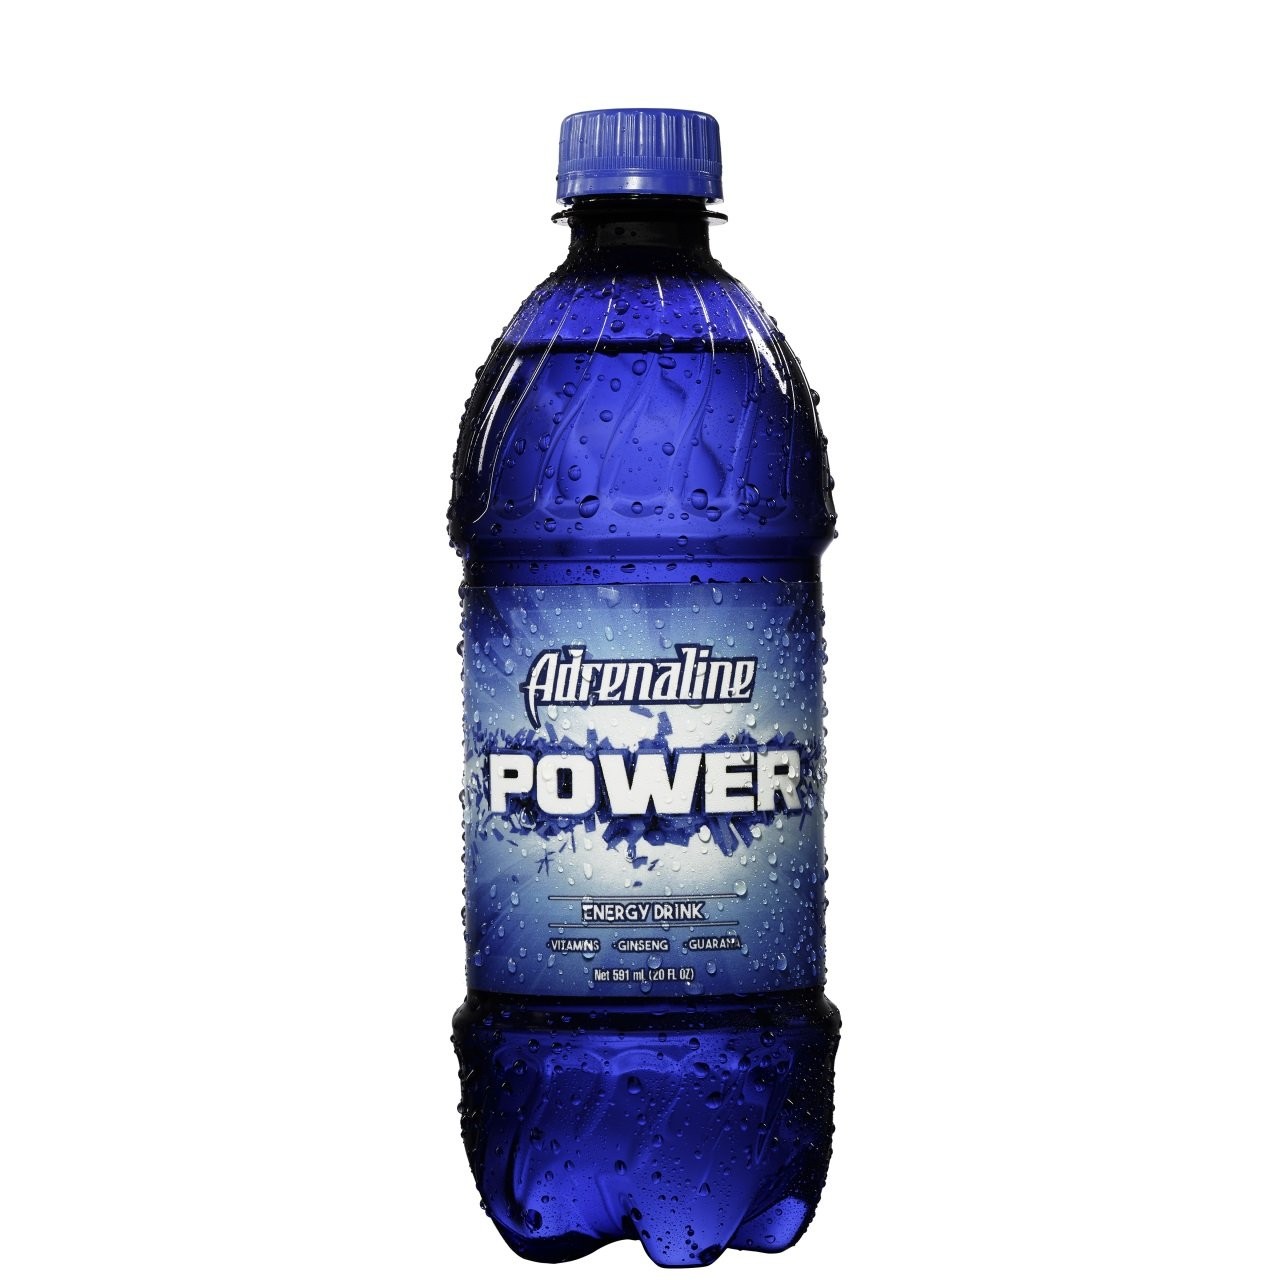 ADRENALINE POWER ENERGY DRINK 591ml